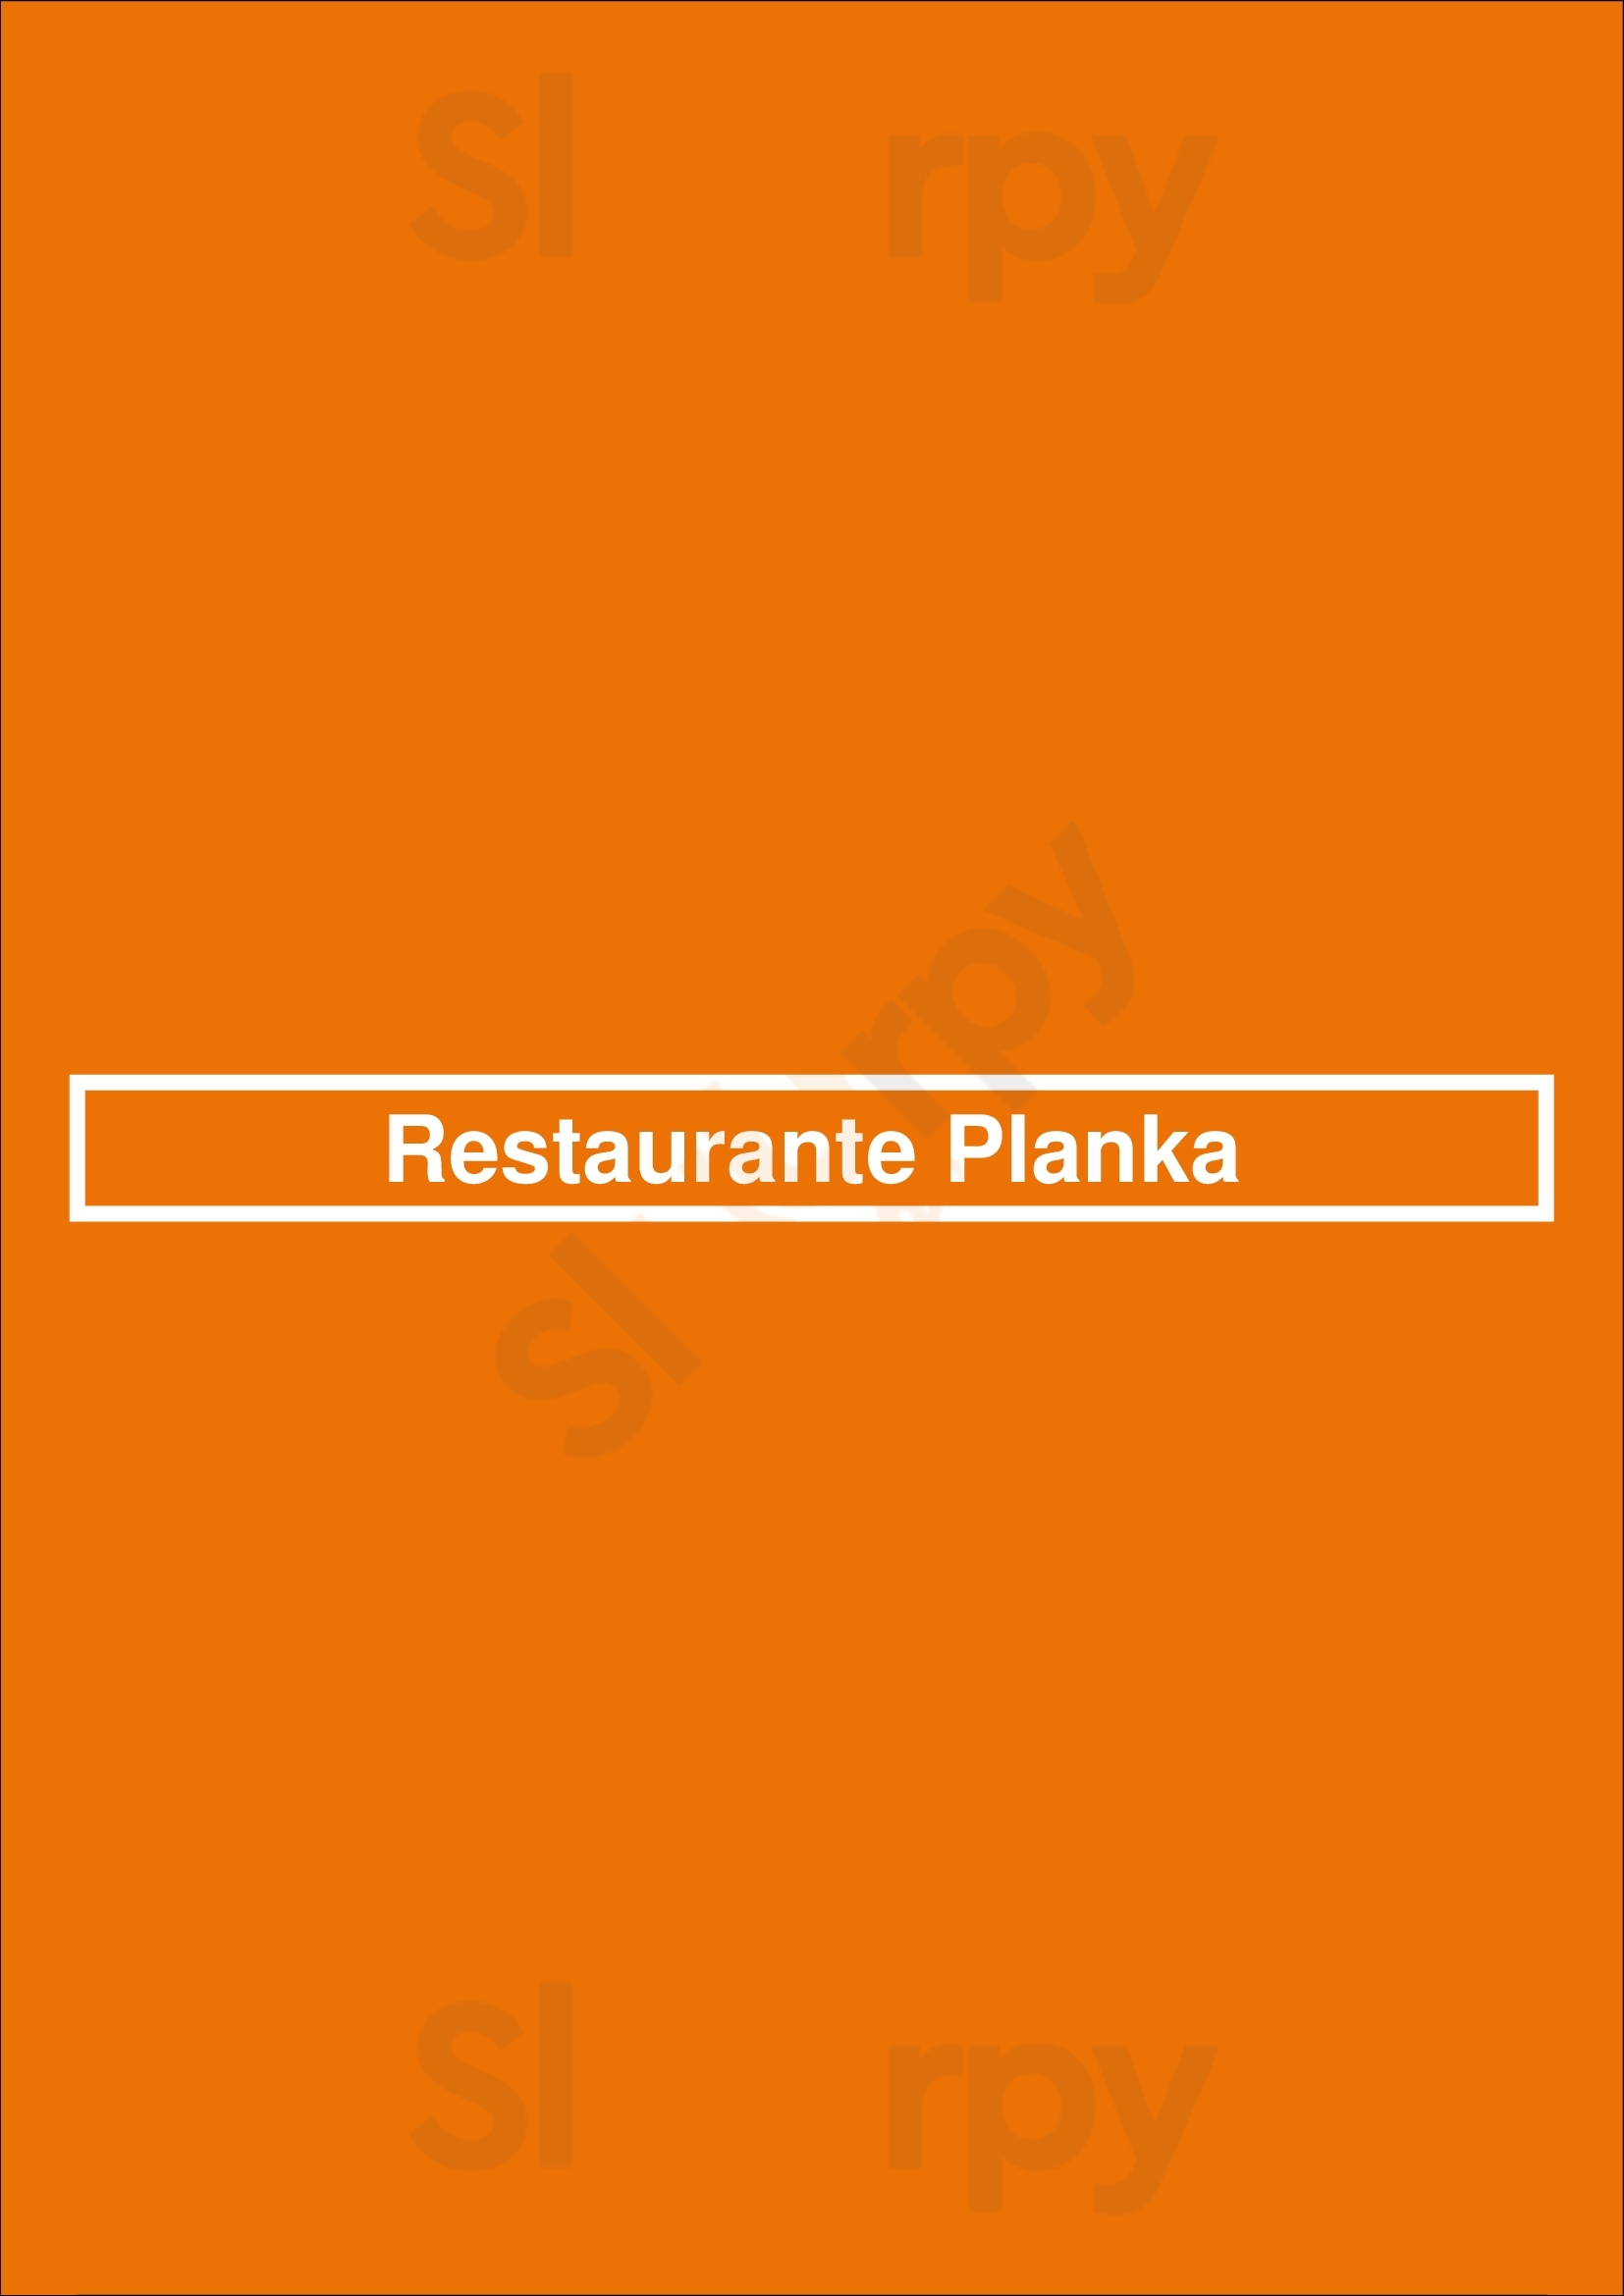 Restaurante Planka Funchal Menu - 1